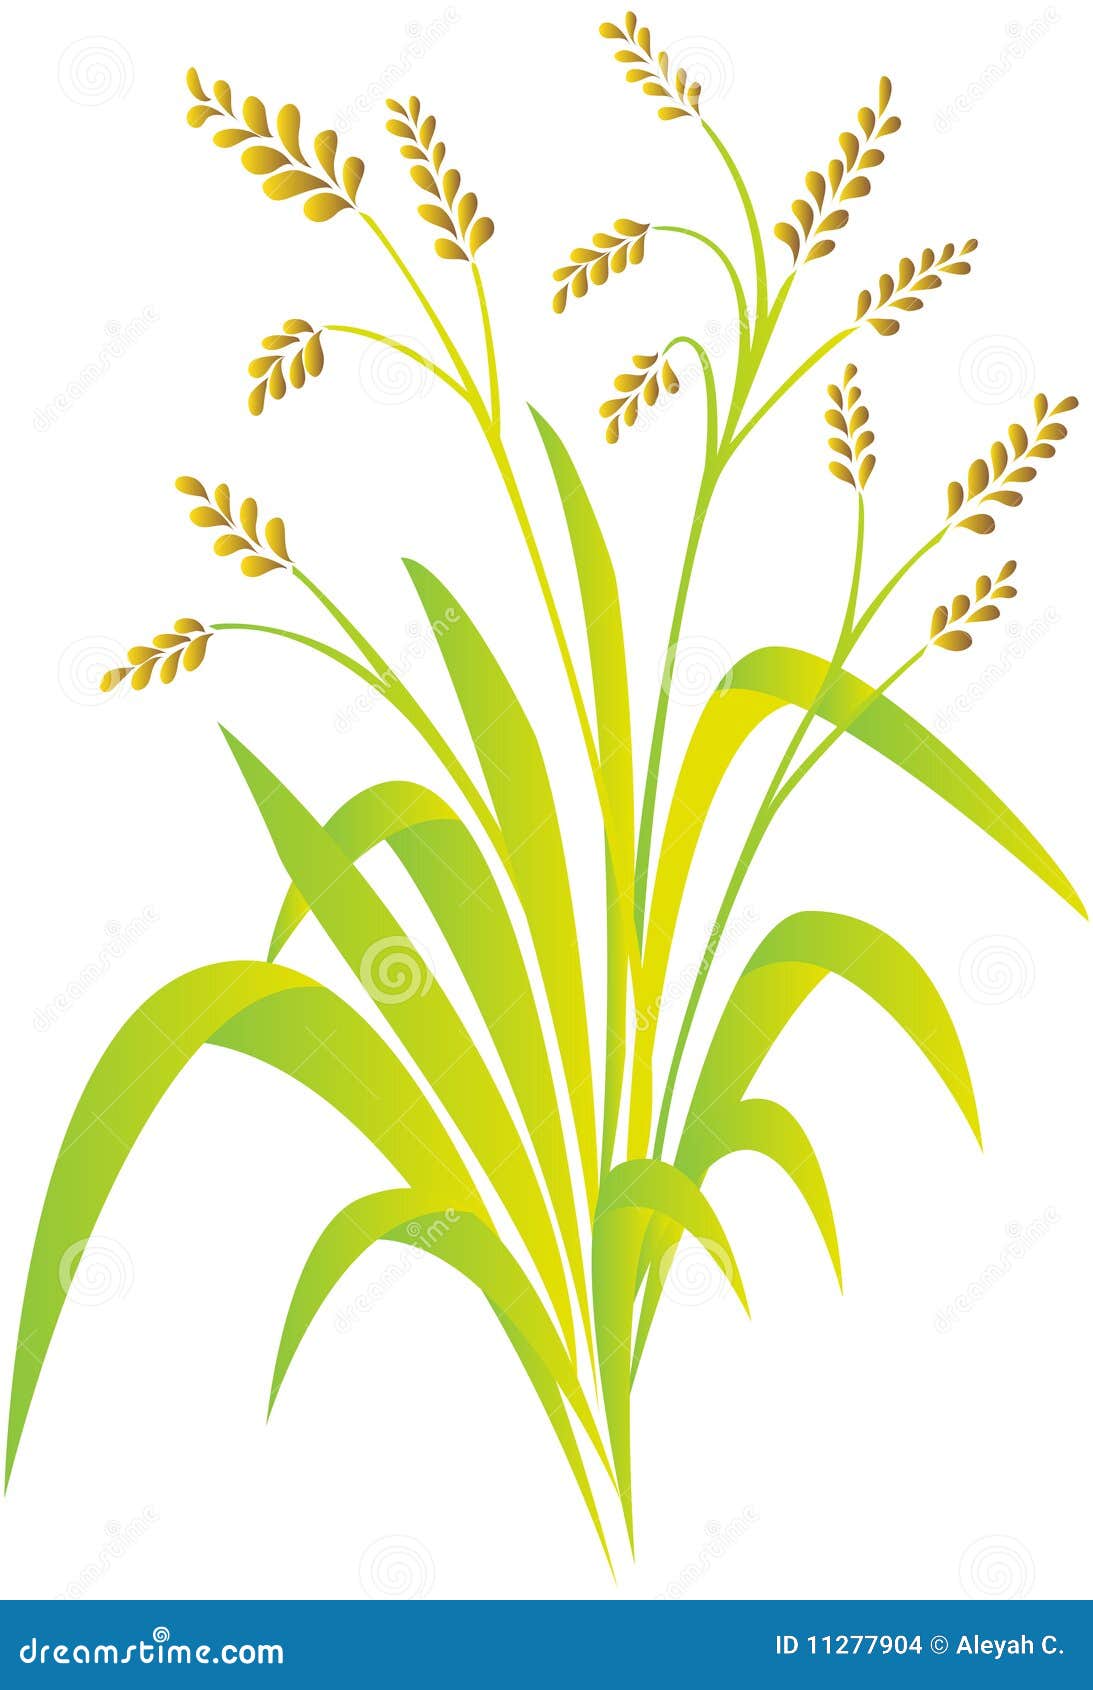 rice plant clipart - photo #18